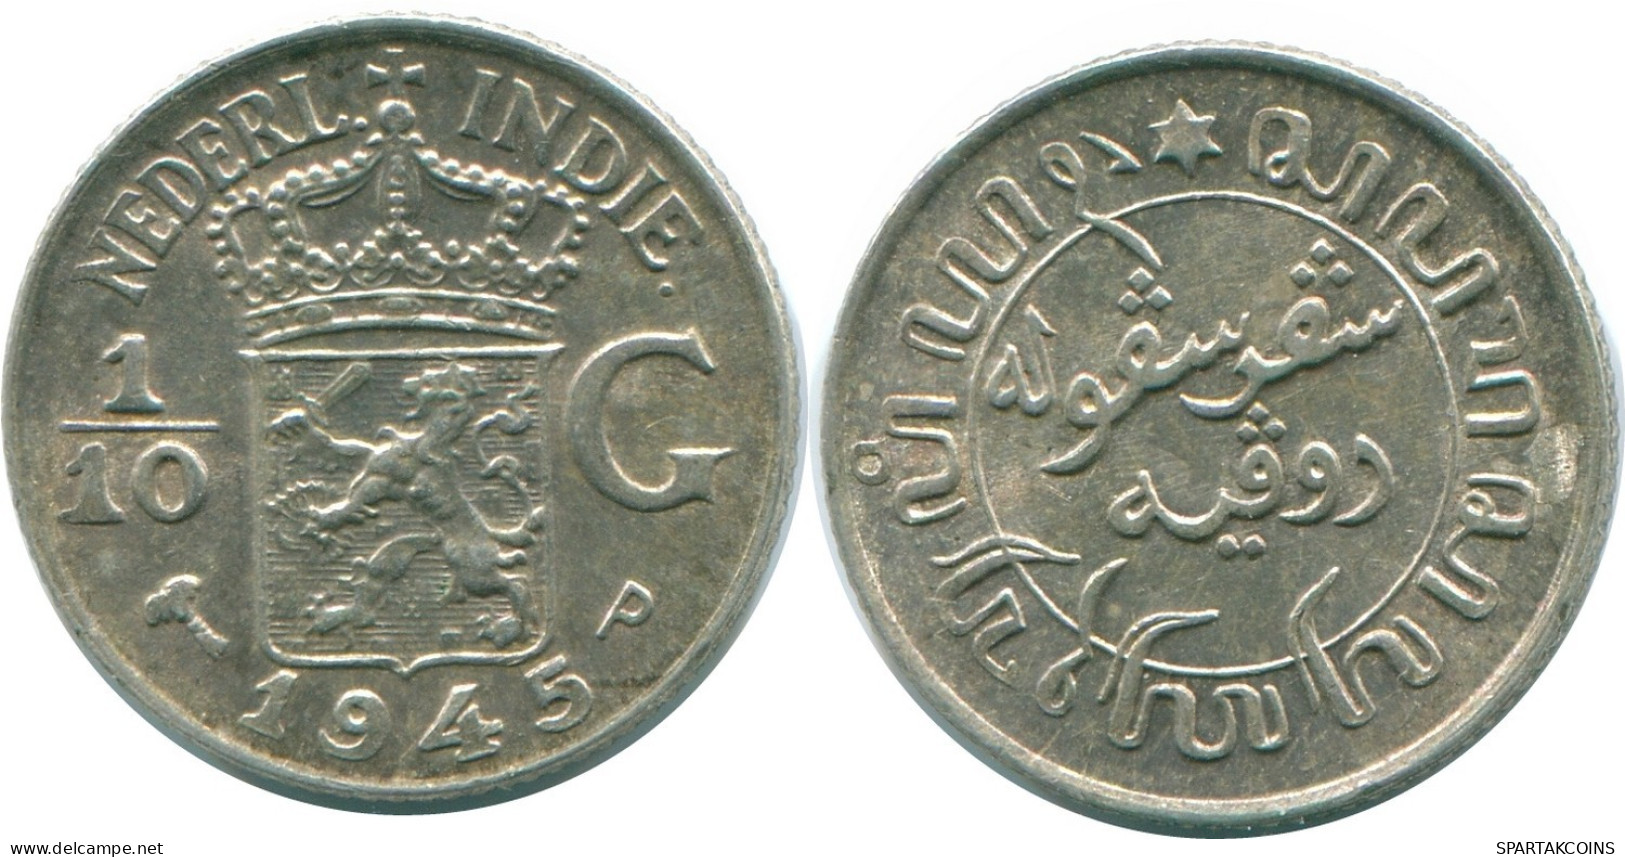 1/10 GULDEN 1945 P NETHERLANDS EAST INDIES SILVER Colonial Coin #NL14093.3.U.A - Indes Néerlandaises